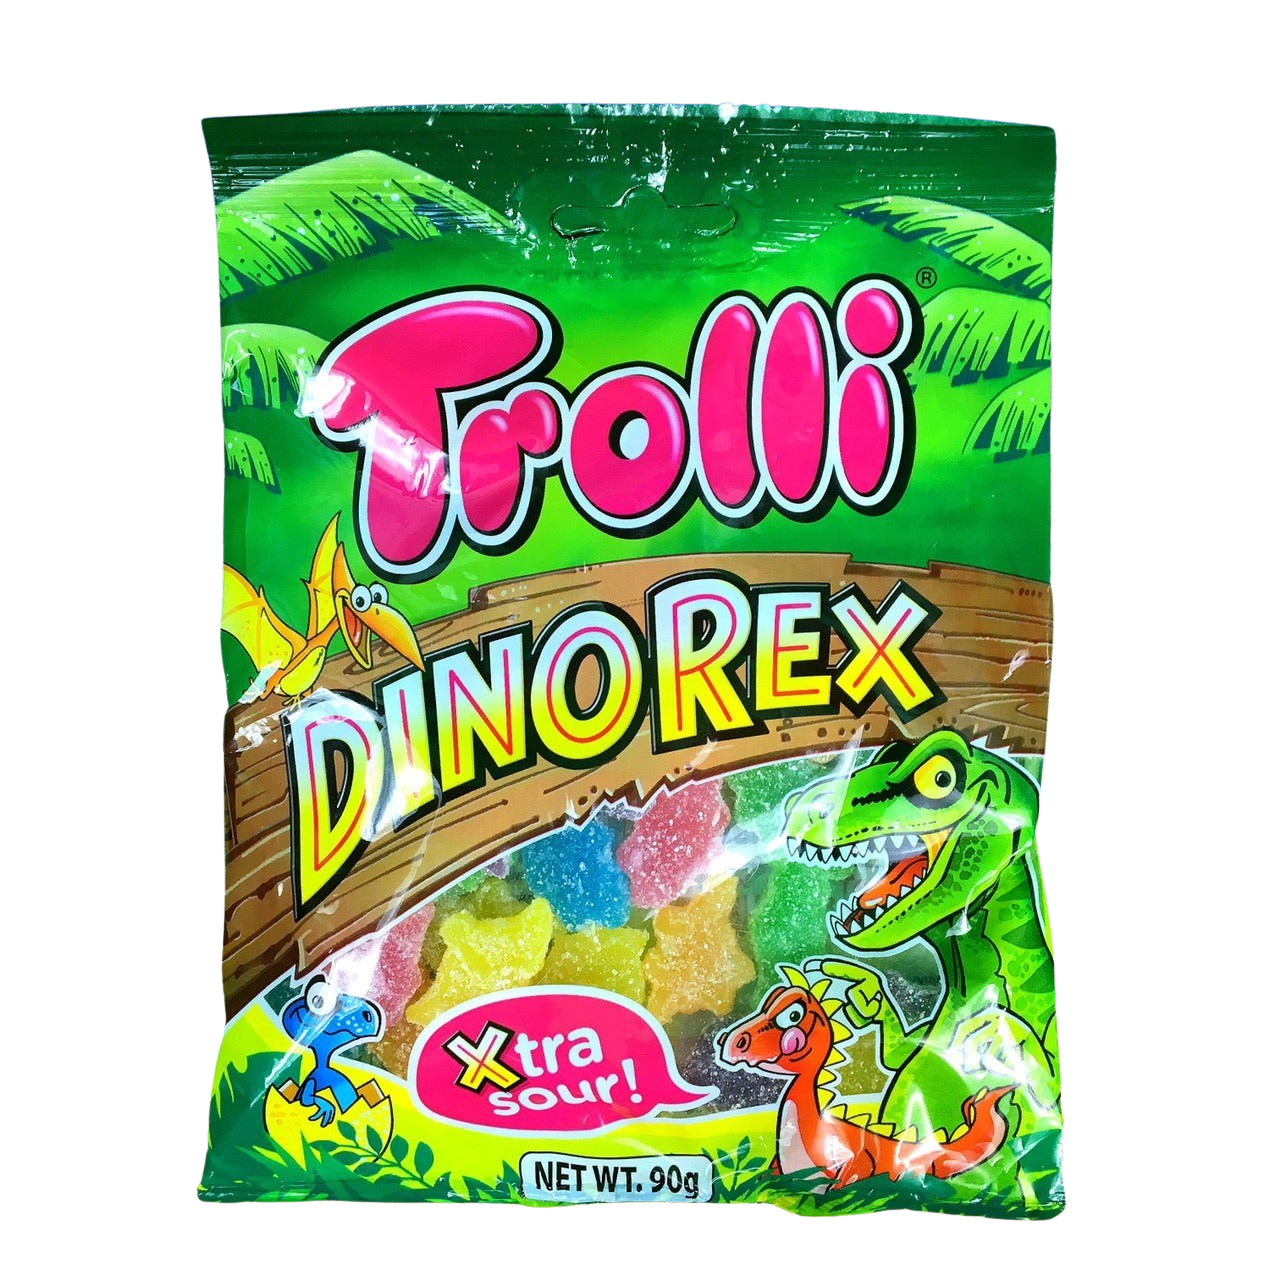 Trolli - Xtra Sour Dinorex